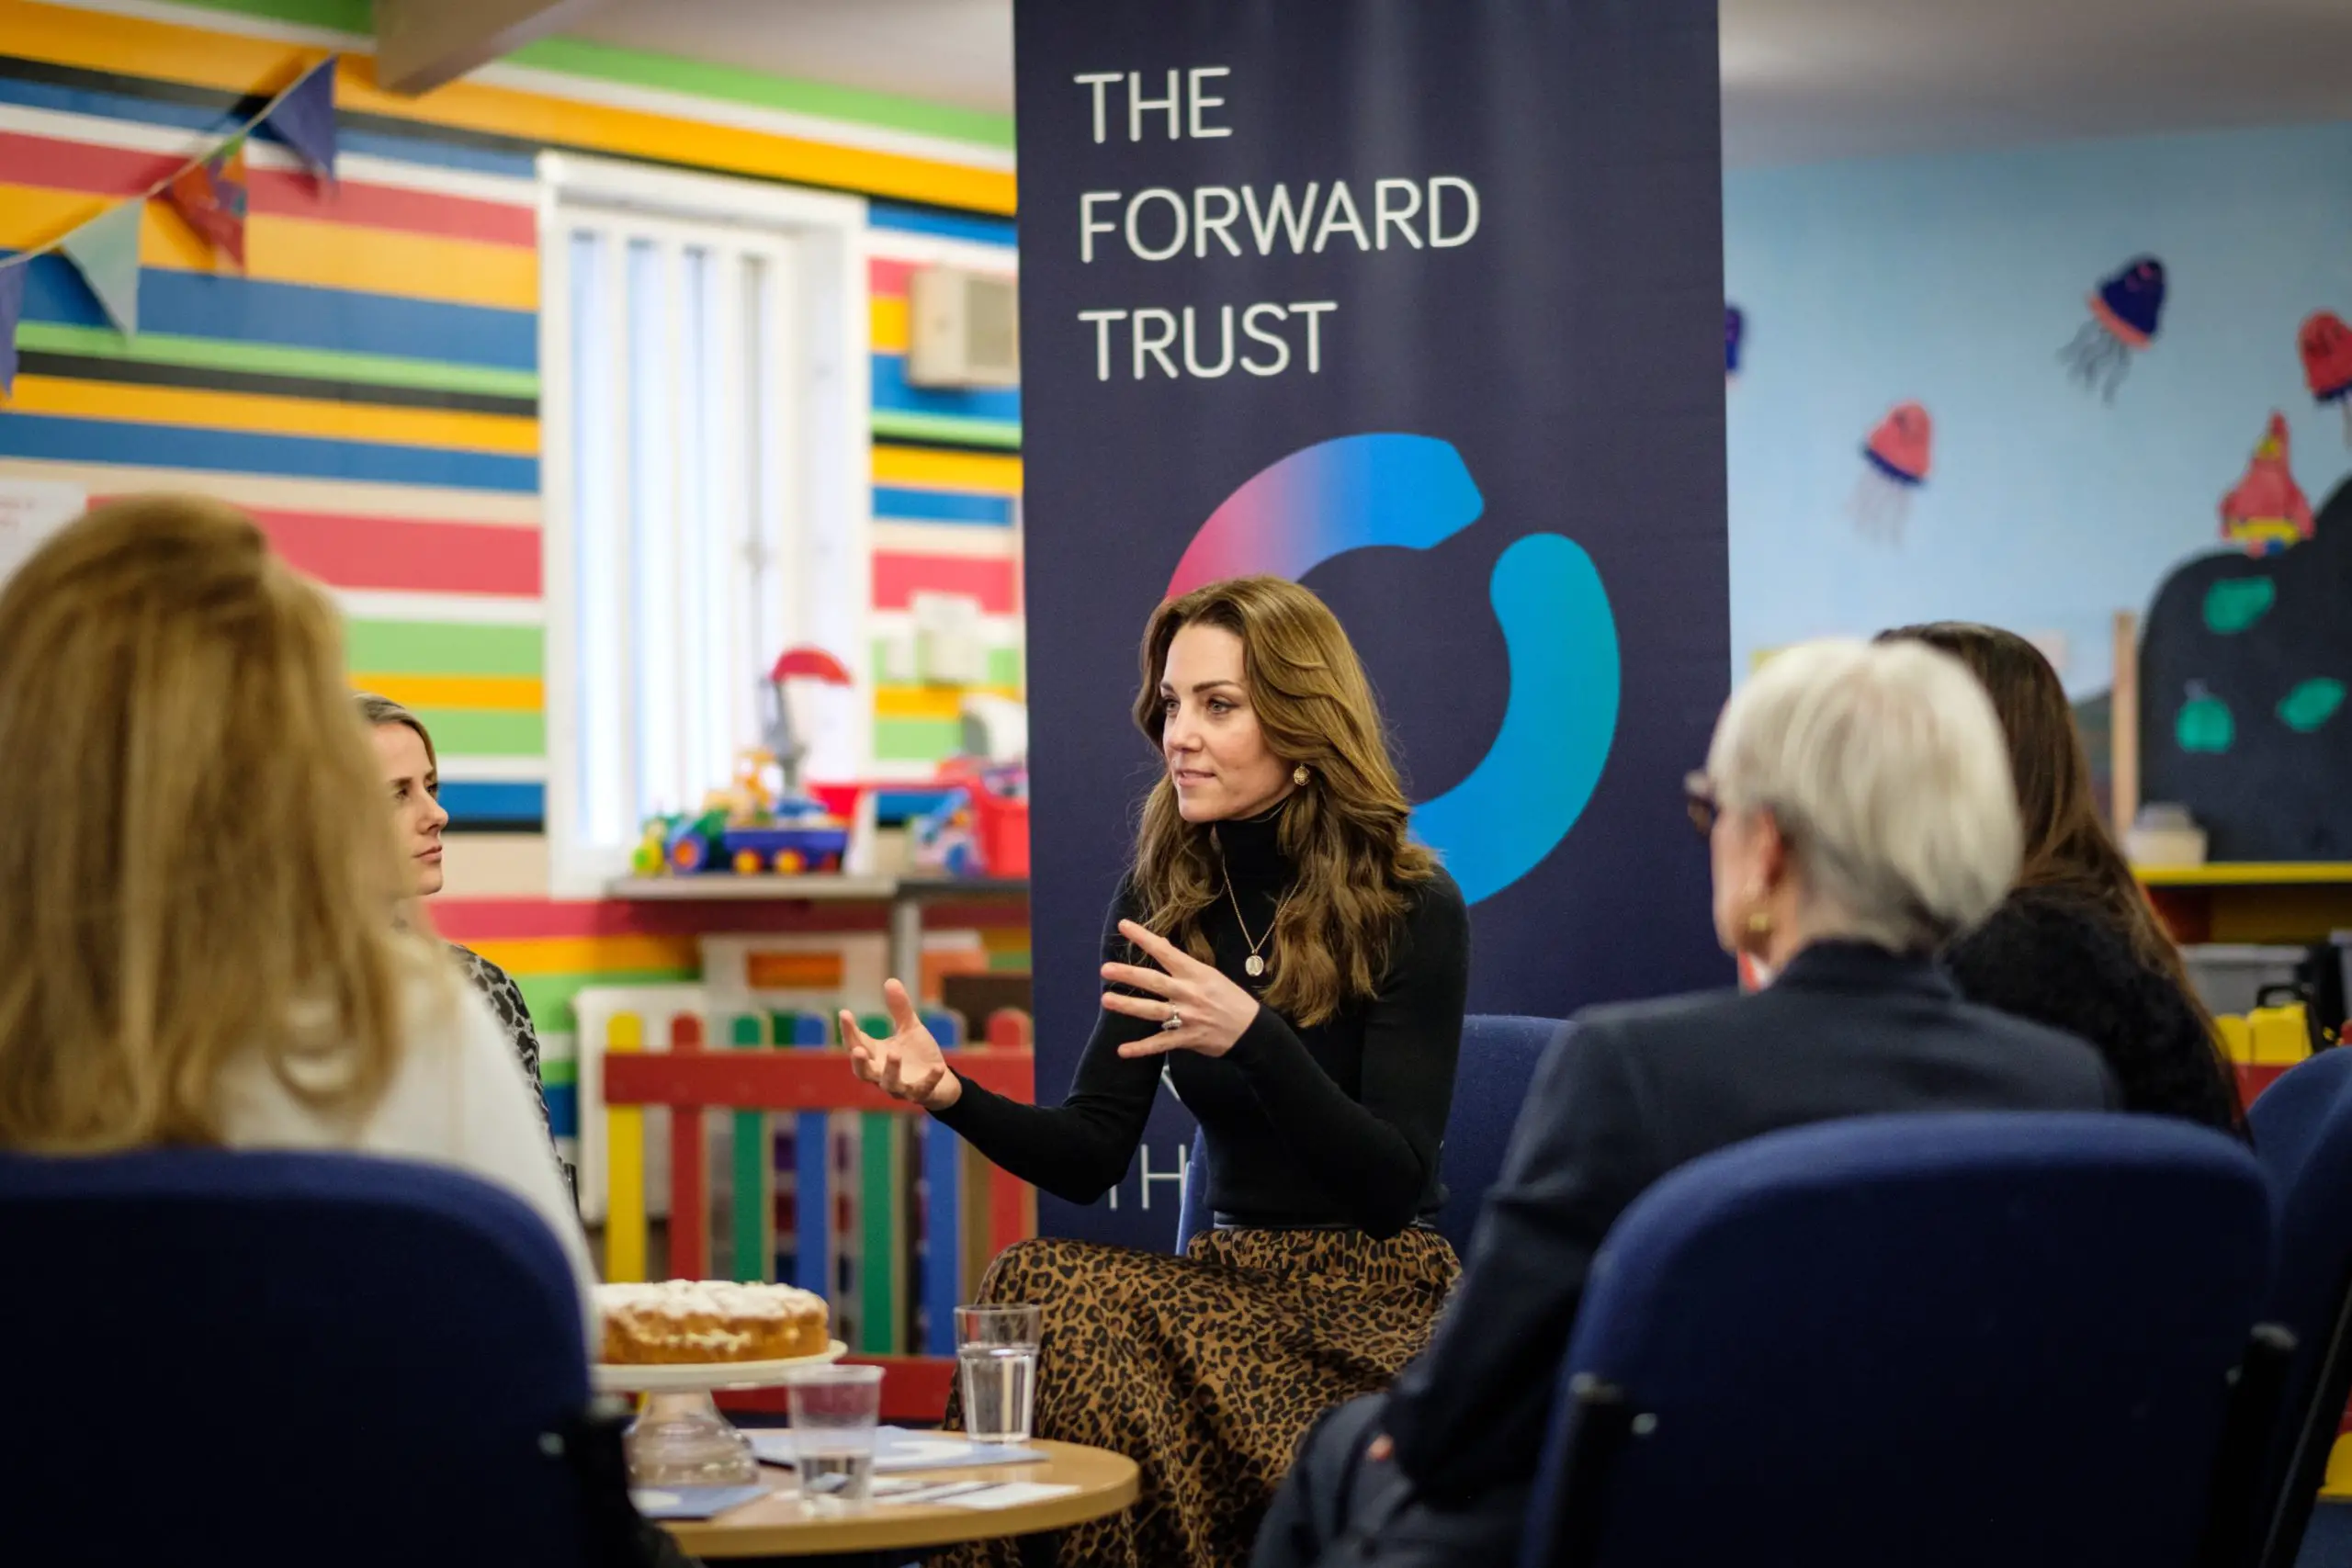 The Duchess of Cambridge visited HM Surrey Prison to launch landmark survey